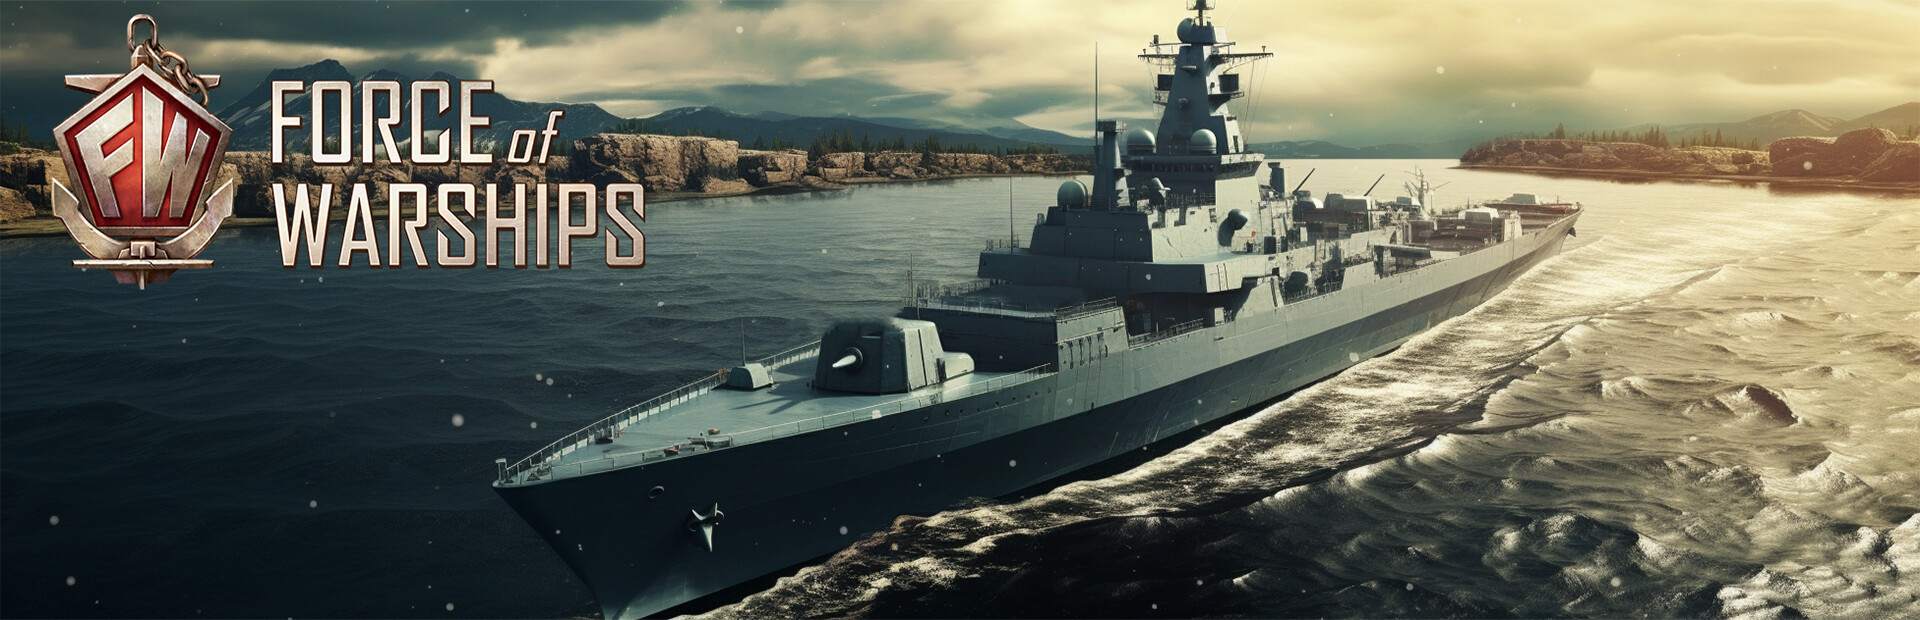 Force of Warships: Battleship Games cover image